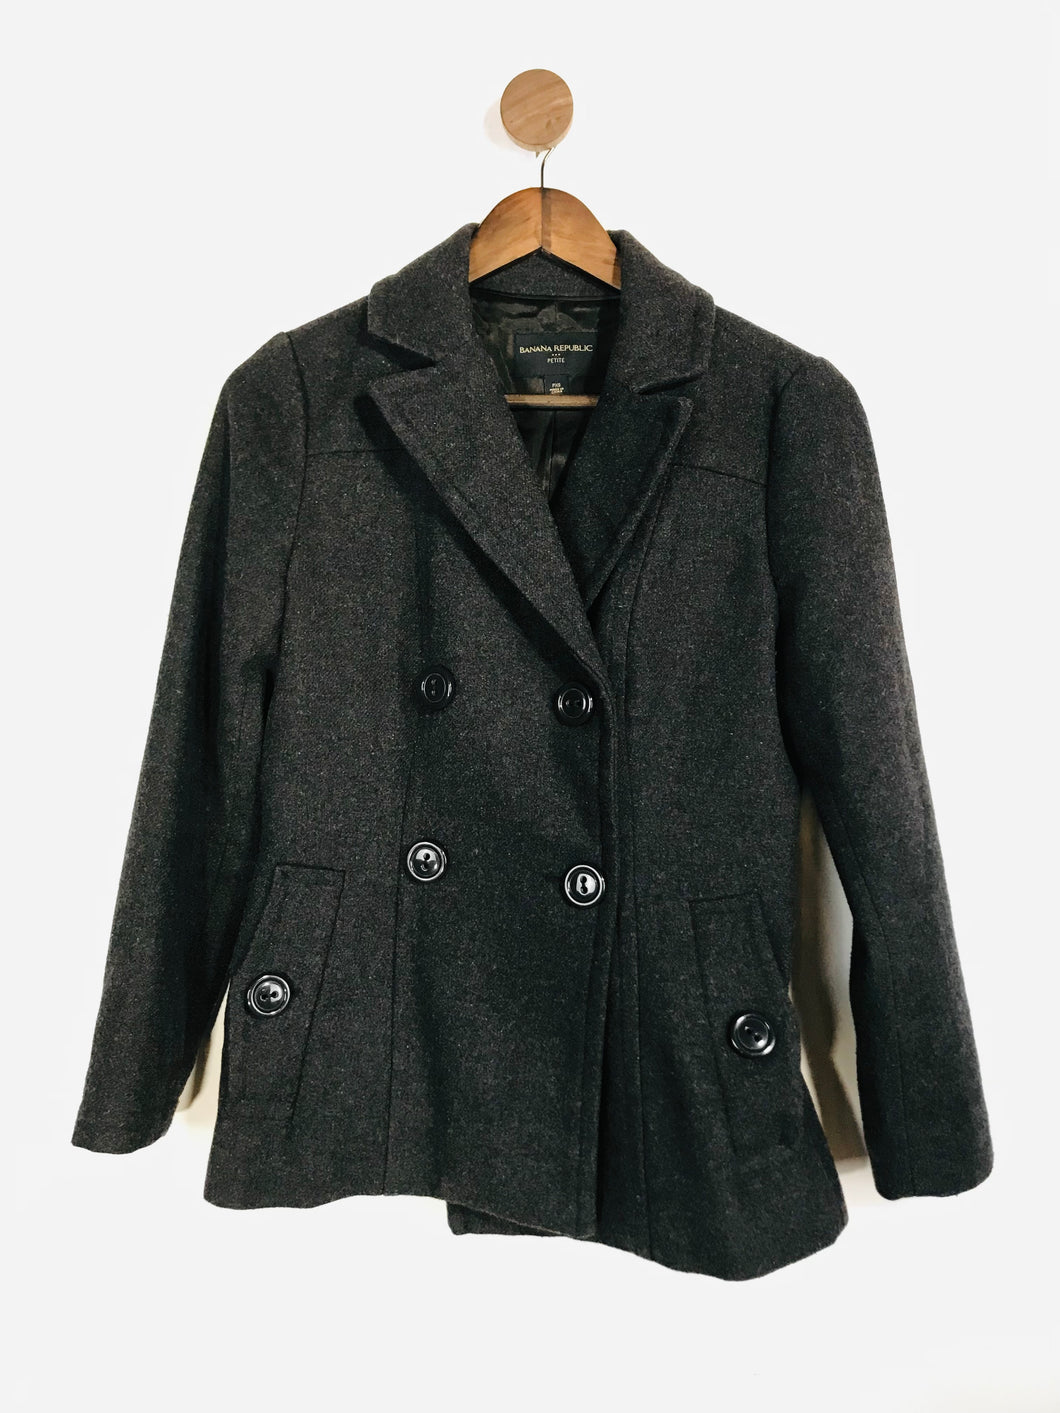 Banana Republic Women's Wool Crop Overcoat Coat | XS UK6-8 | Grey